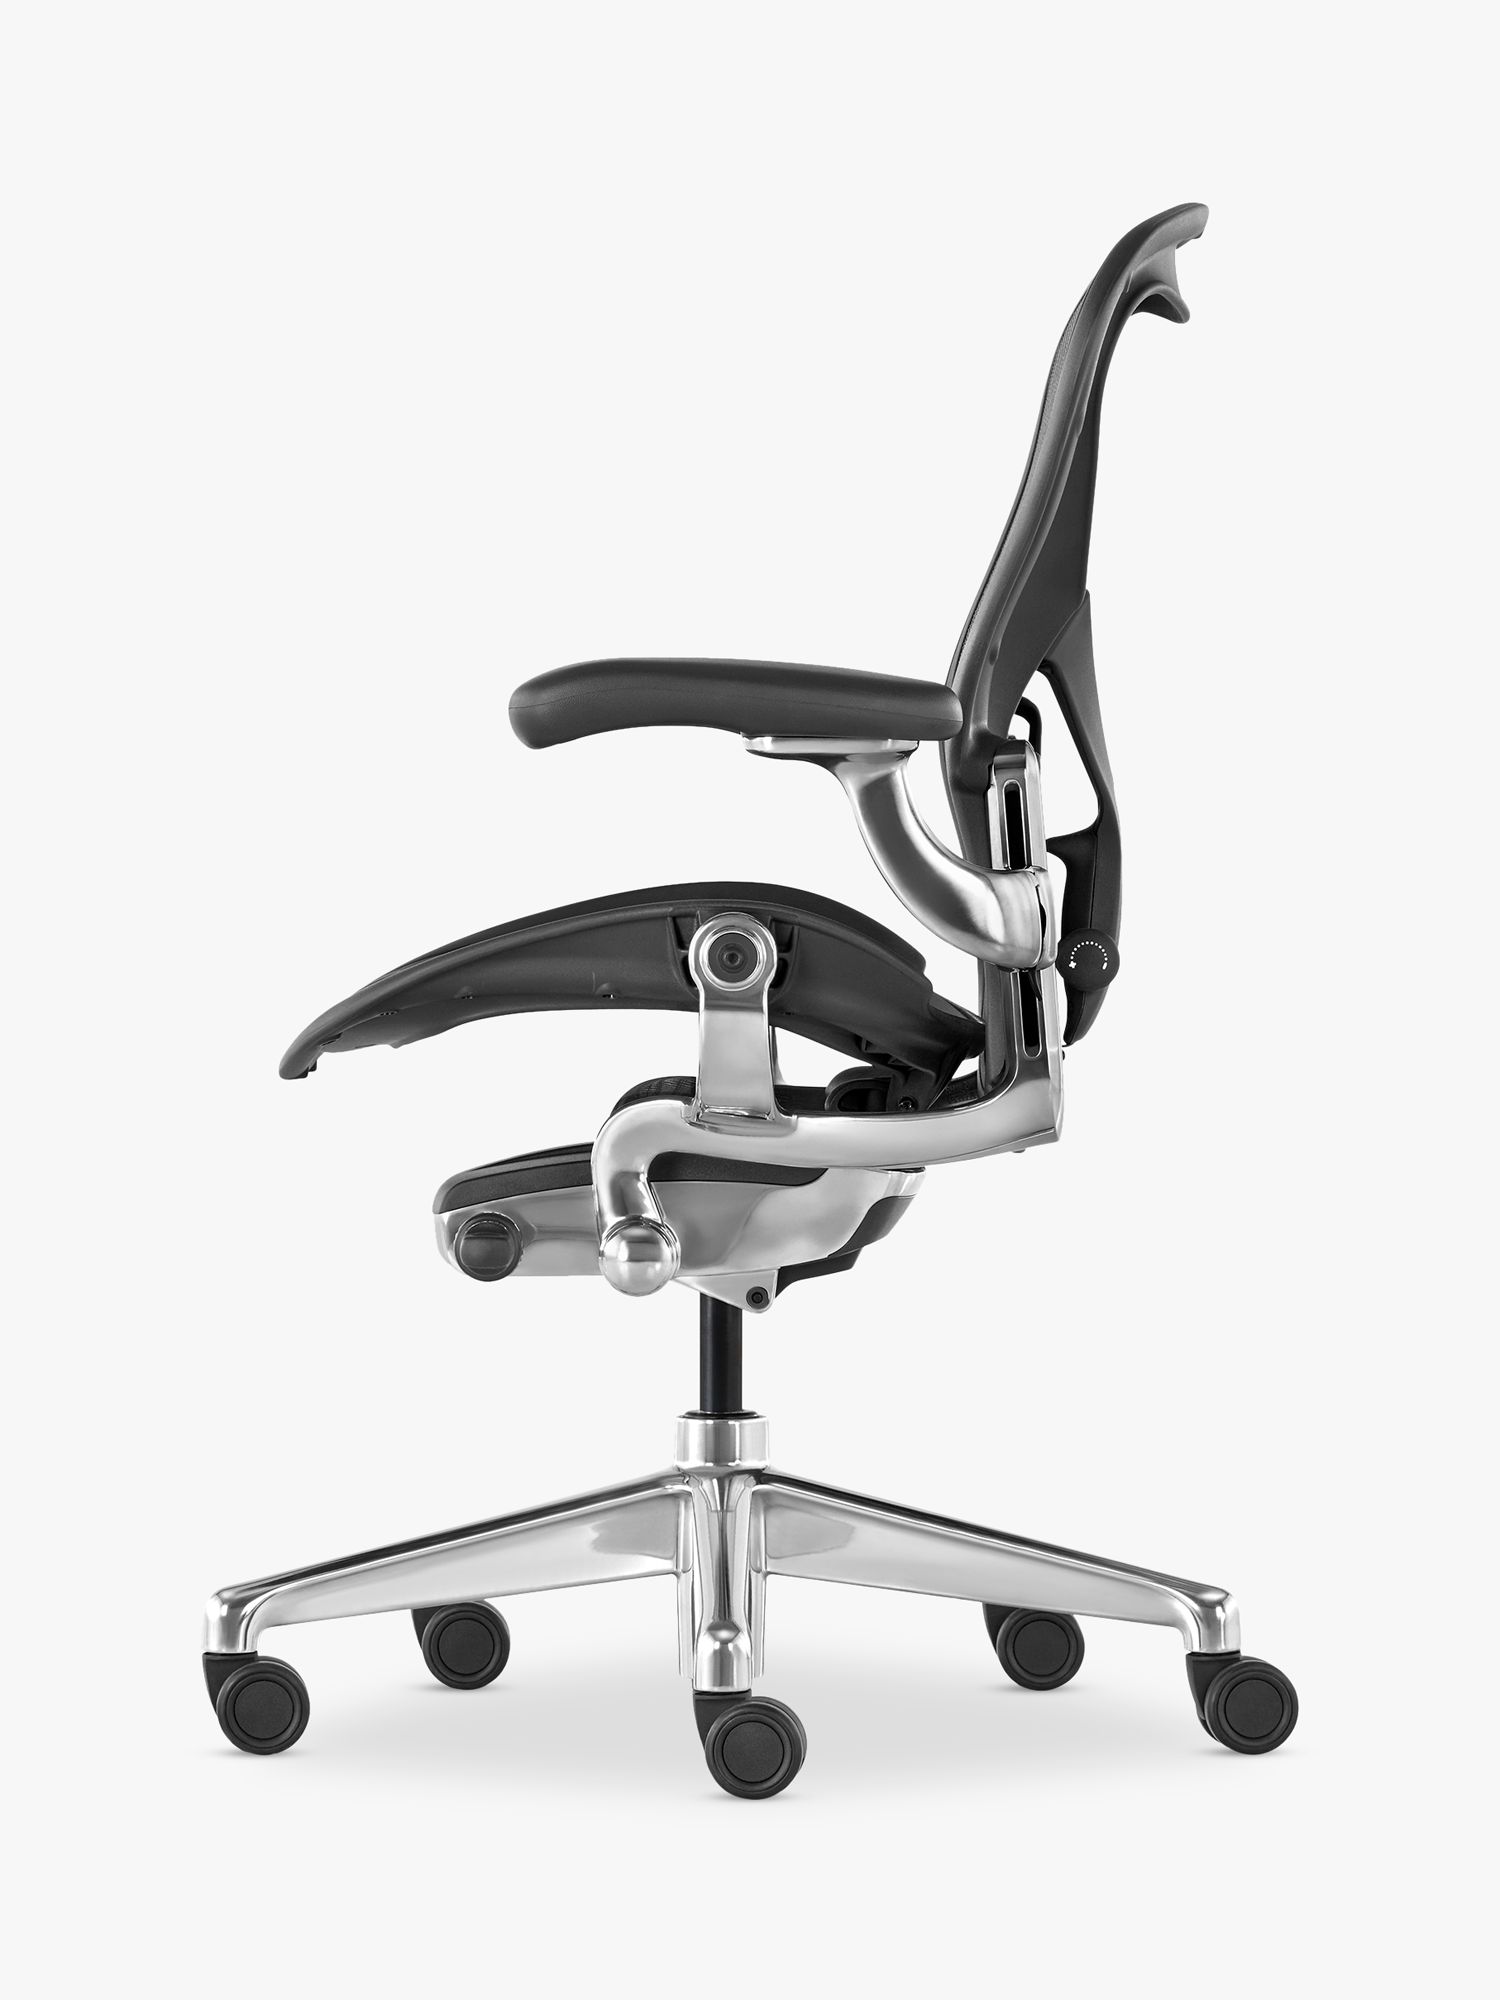 Rådne angst Bar Herman Miller Aeron Office Chair, Size A, Graphite/Polished Aluminium